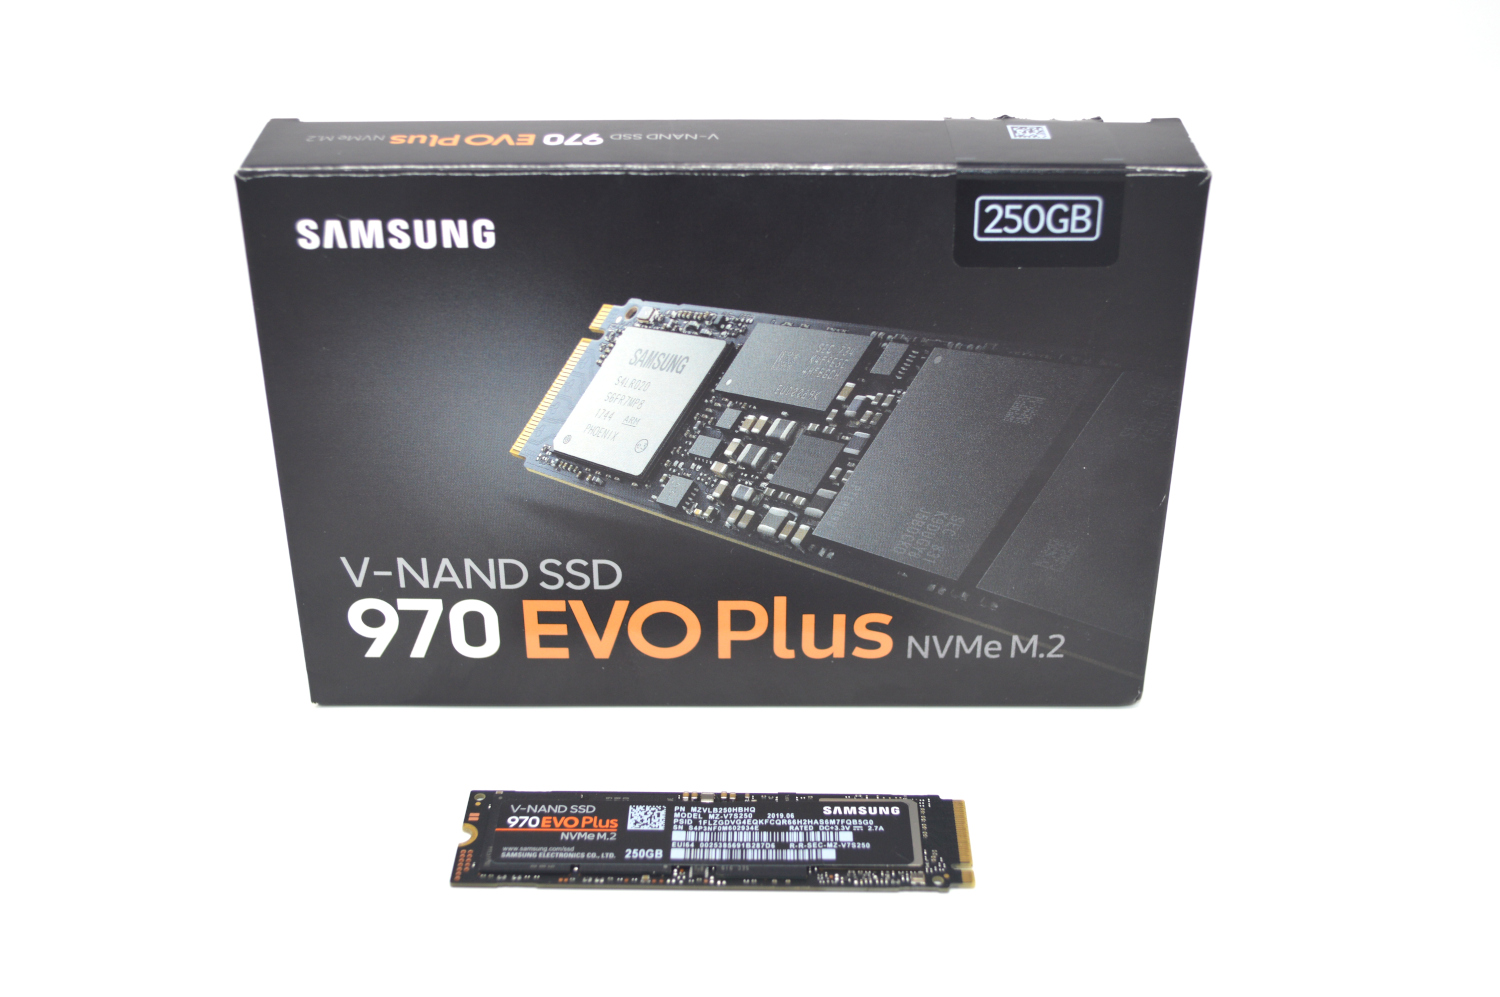 Samsung 970 Evo Plus 250gb Nvme Ssd Review Servethehome